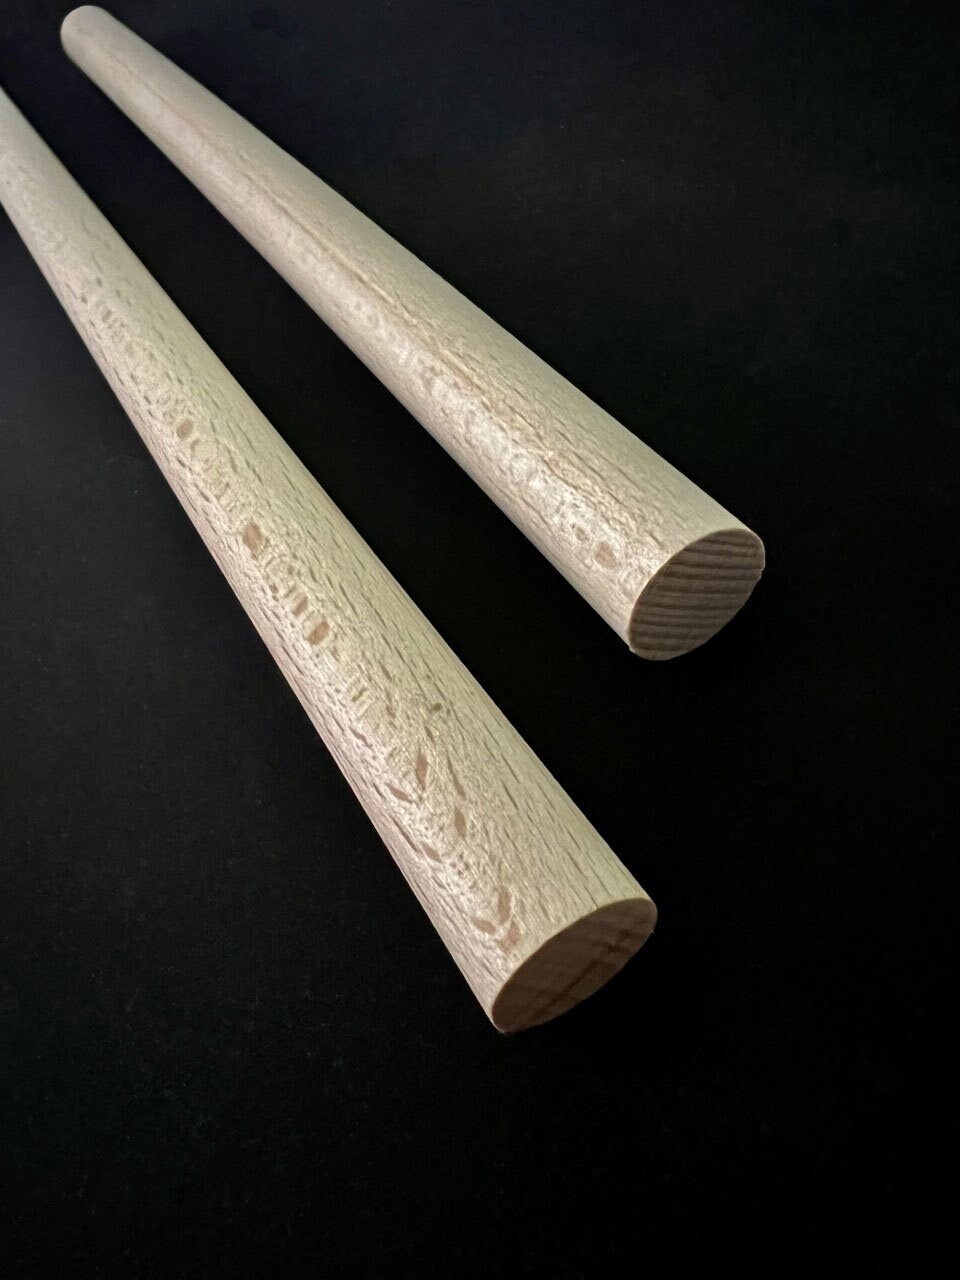 20mm Round Wooden Sticks ,wood Dowel Sticks Unfinished Natural